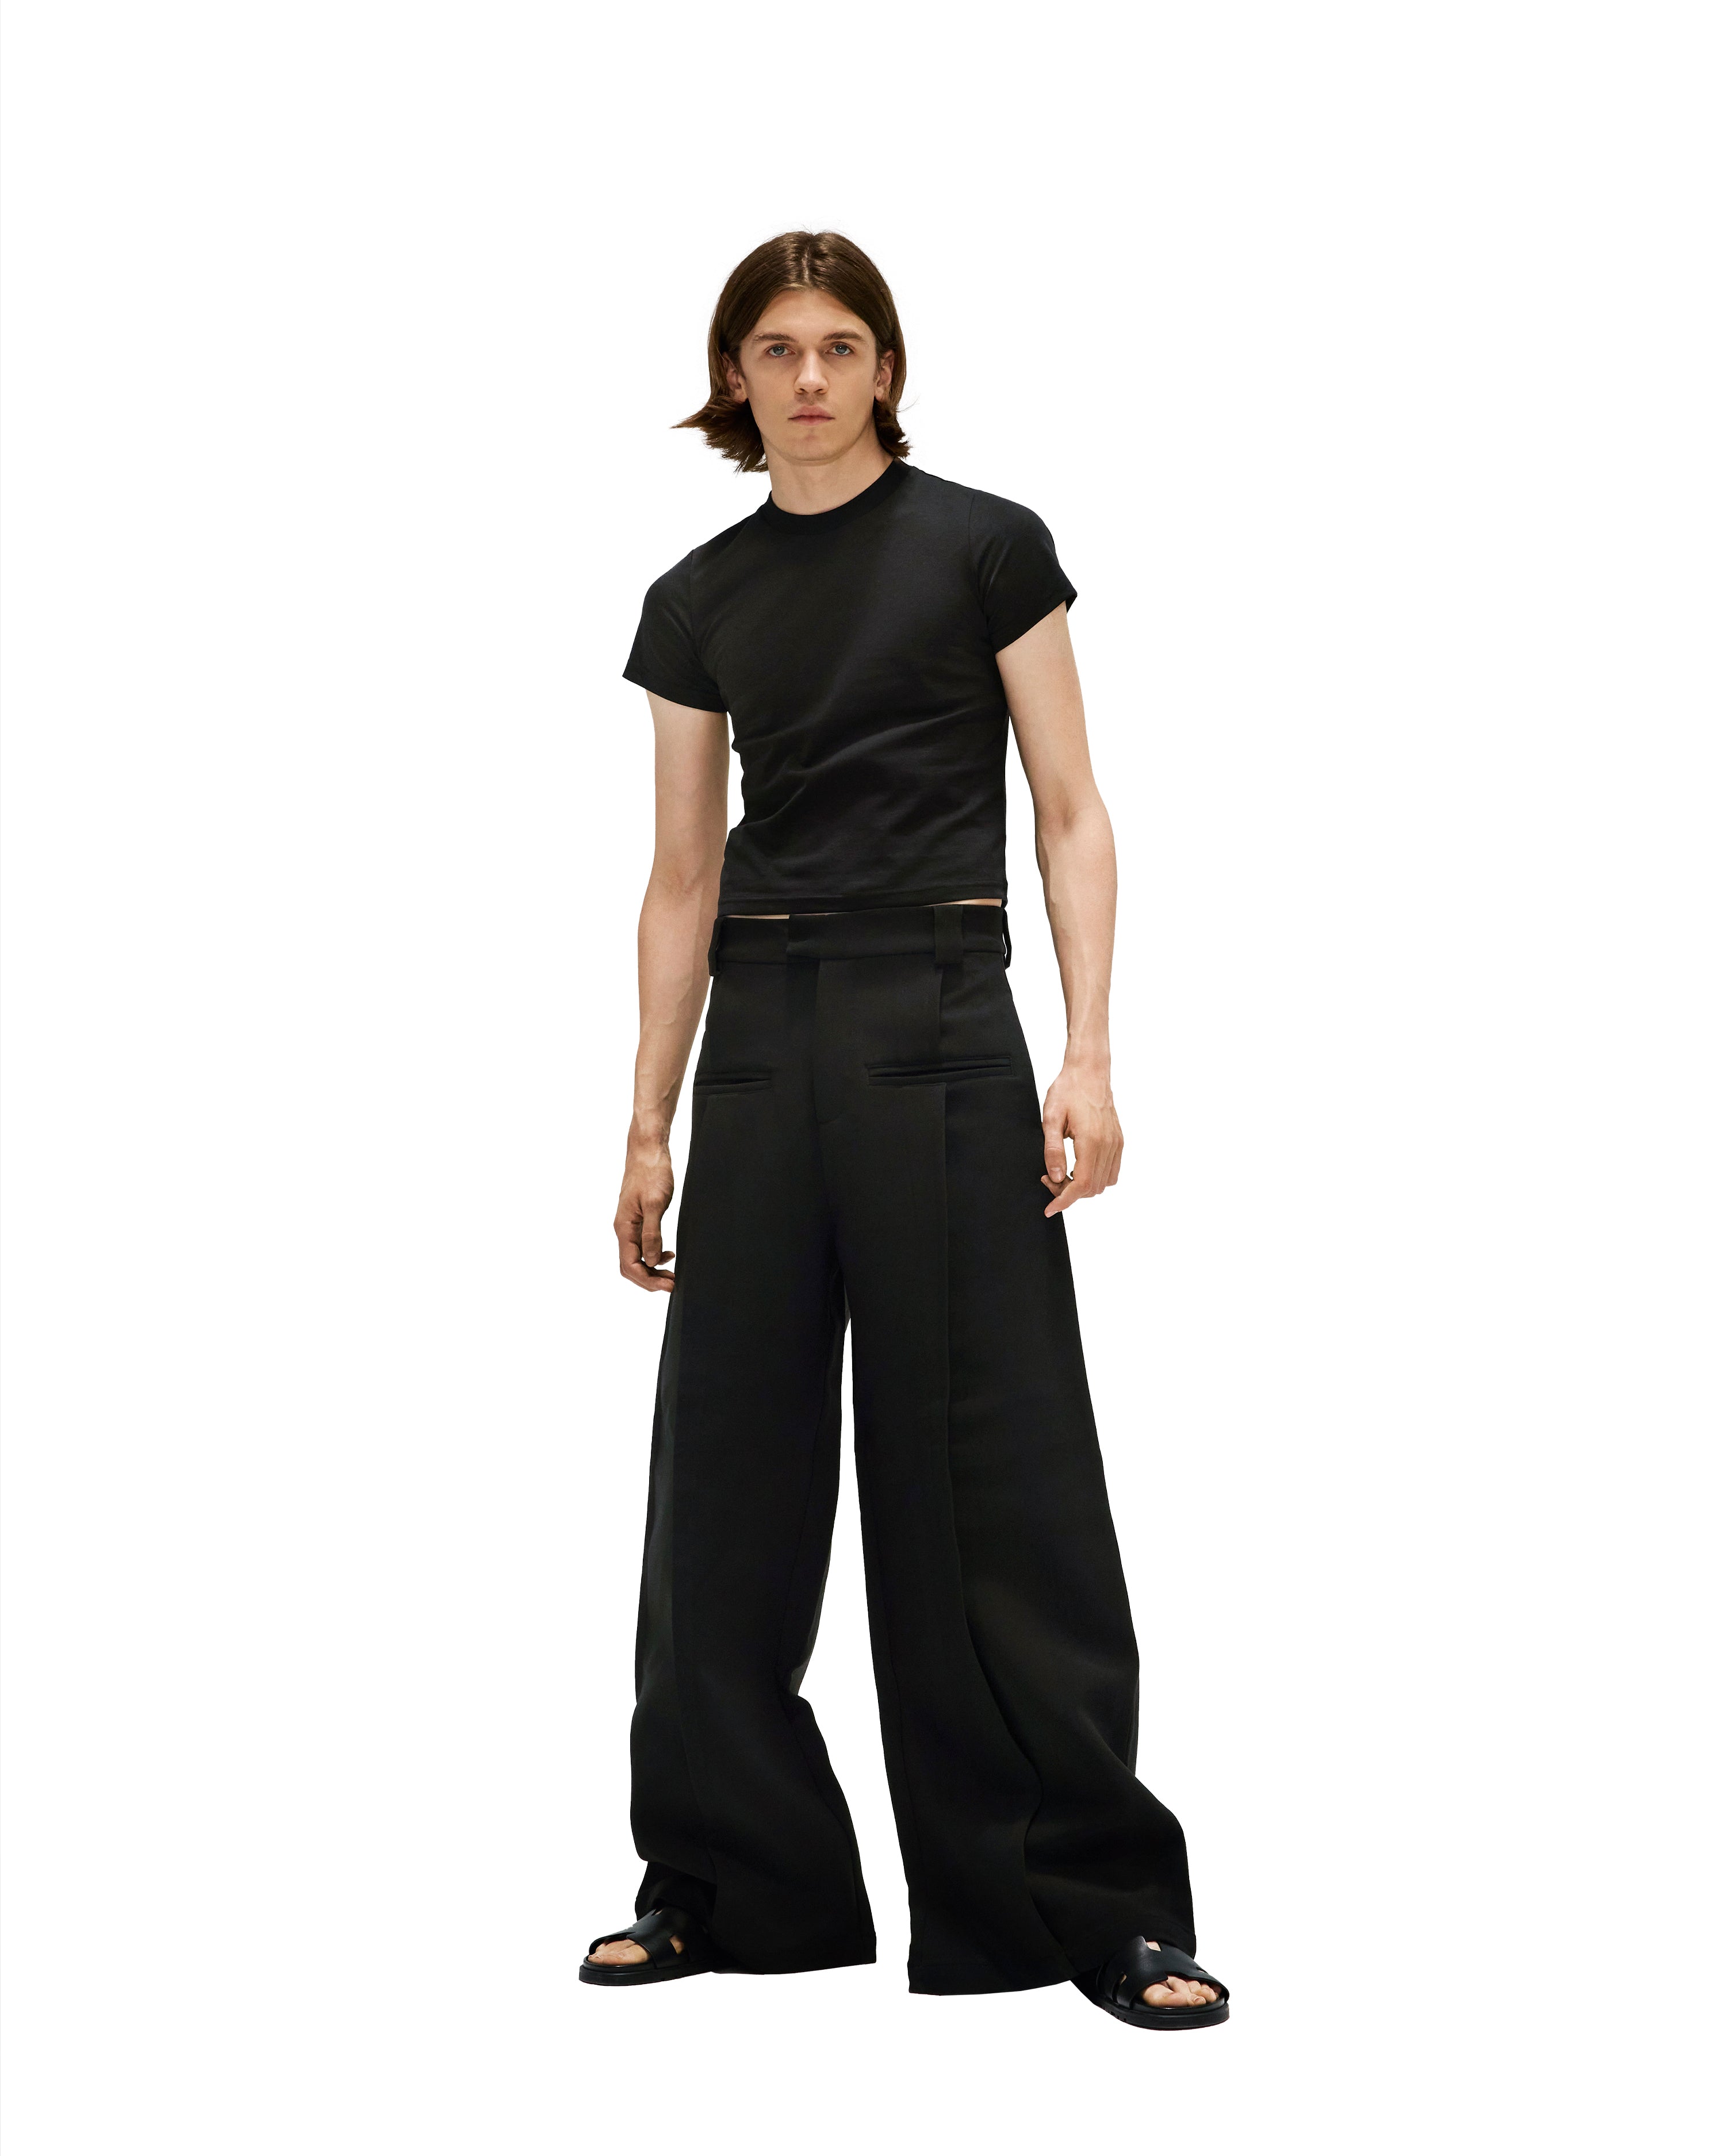 FAXCOPYEXPRESS  Black wide pants